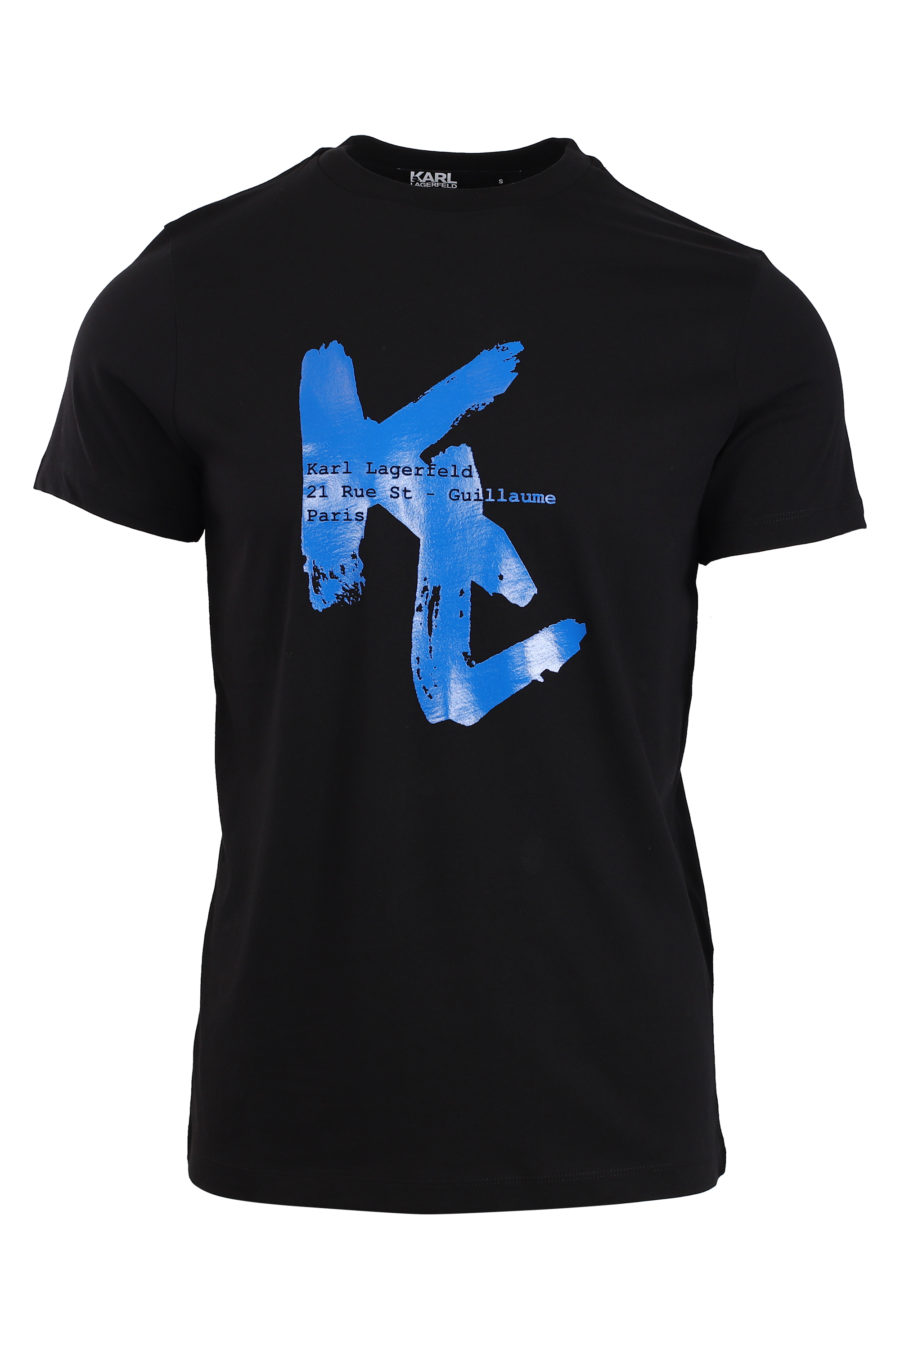 Black T-shirt with blue maxi logo - IMG 0827